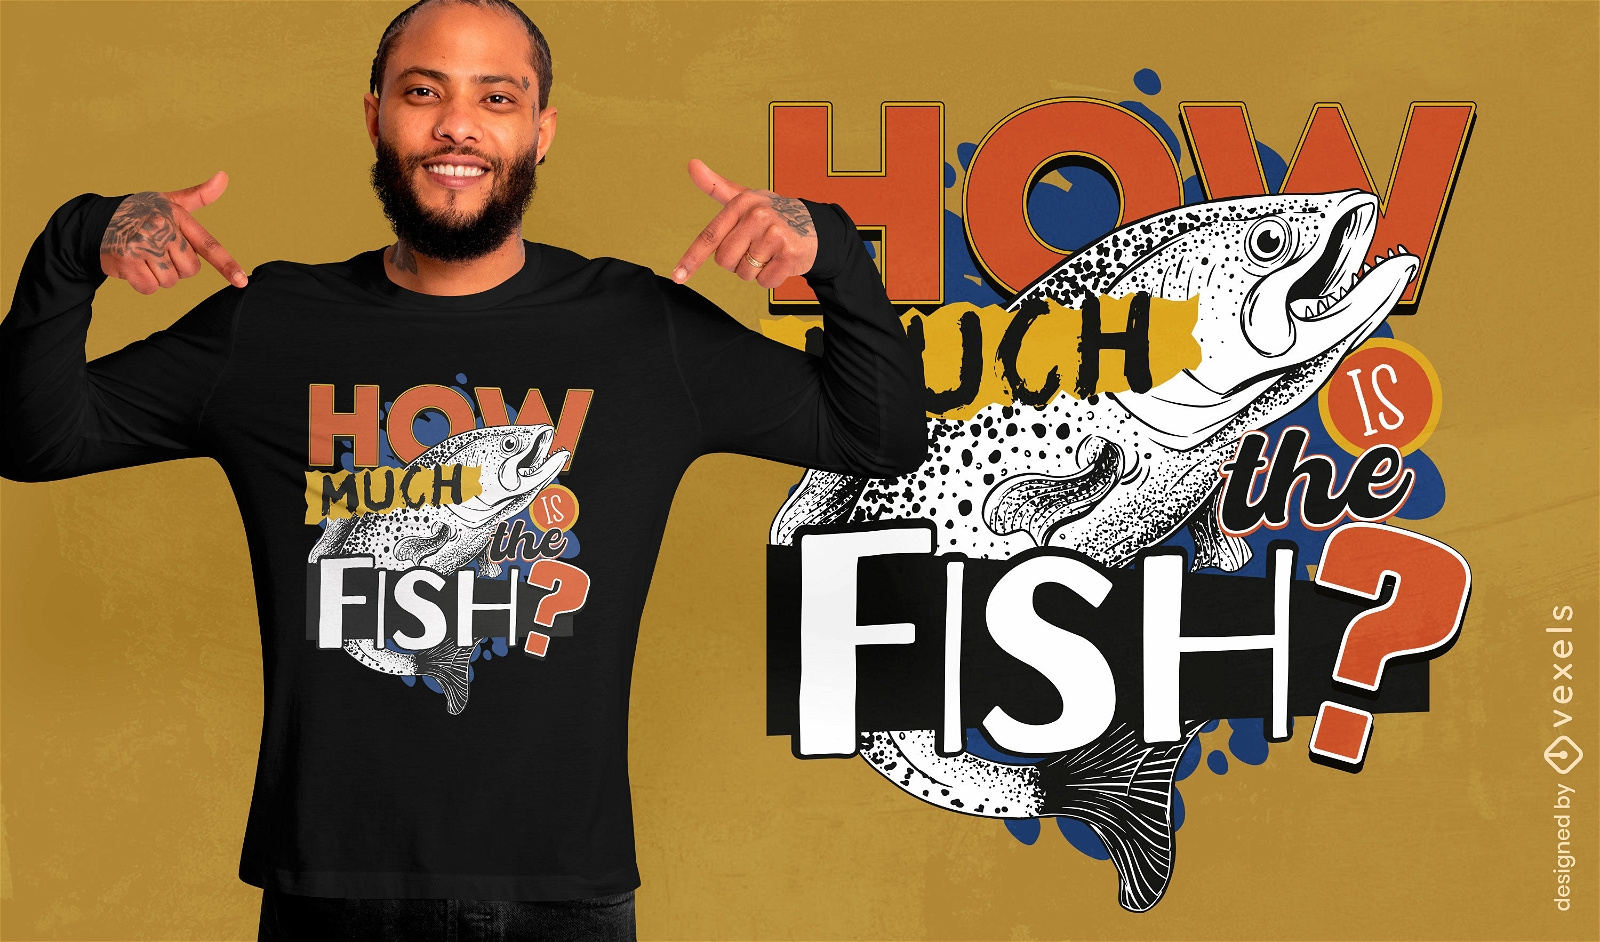 Fish question t-shirt design